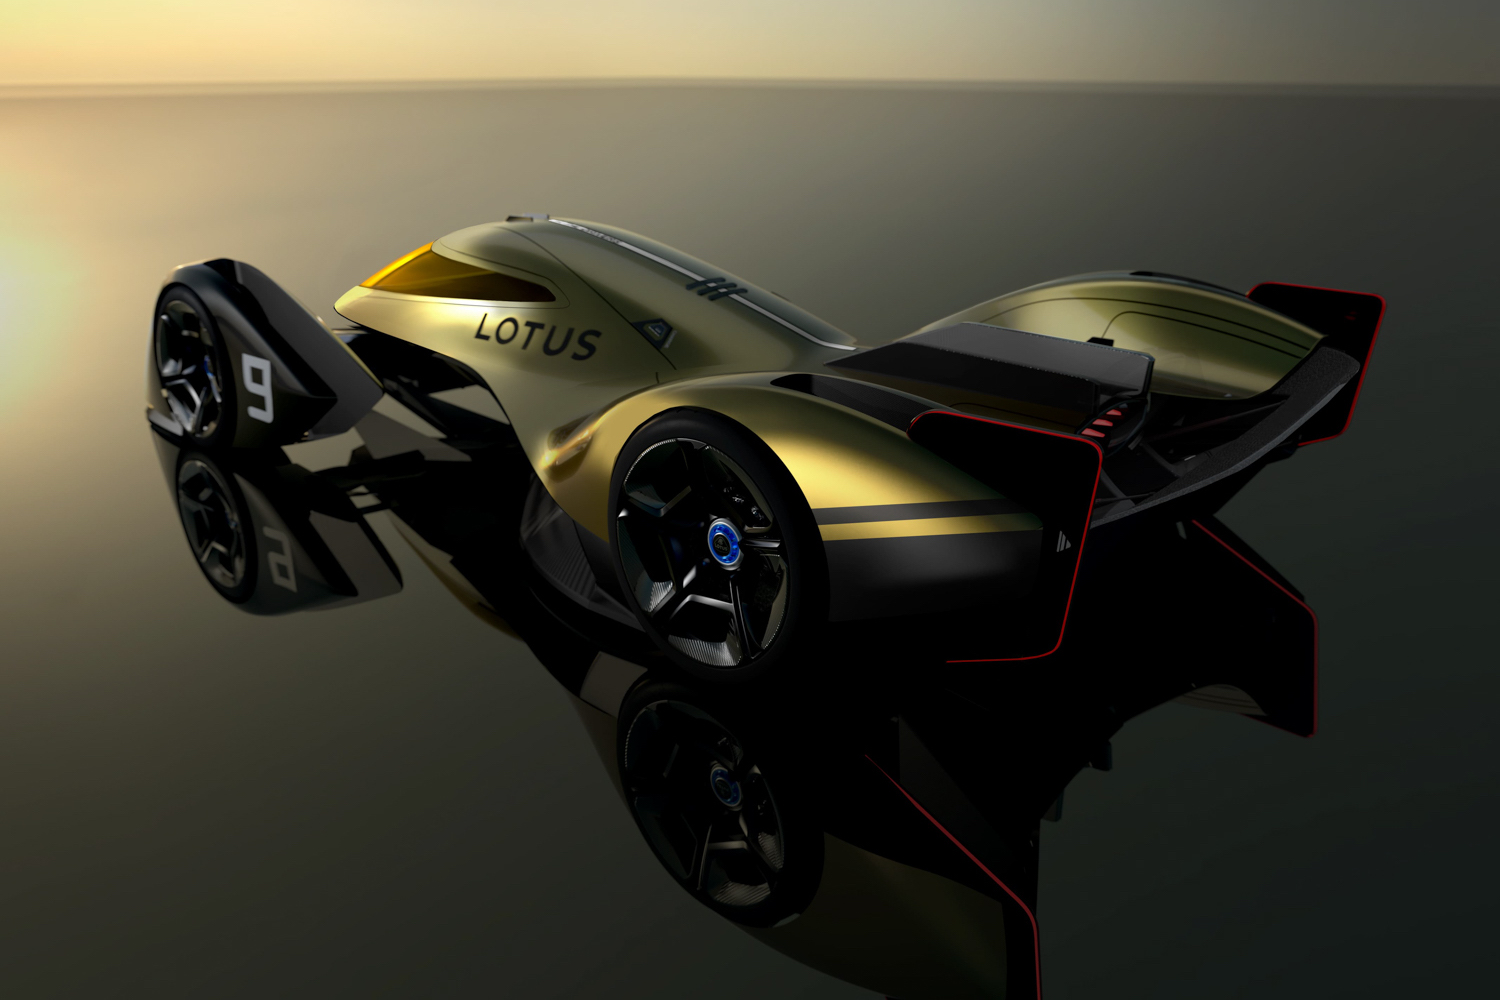 Lotus previews 2030 EV endurance racer